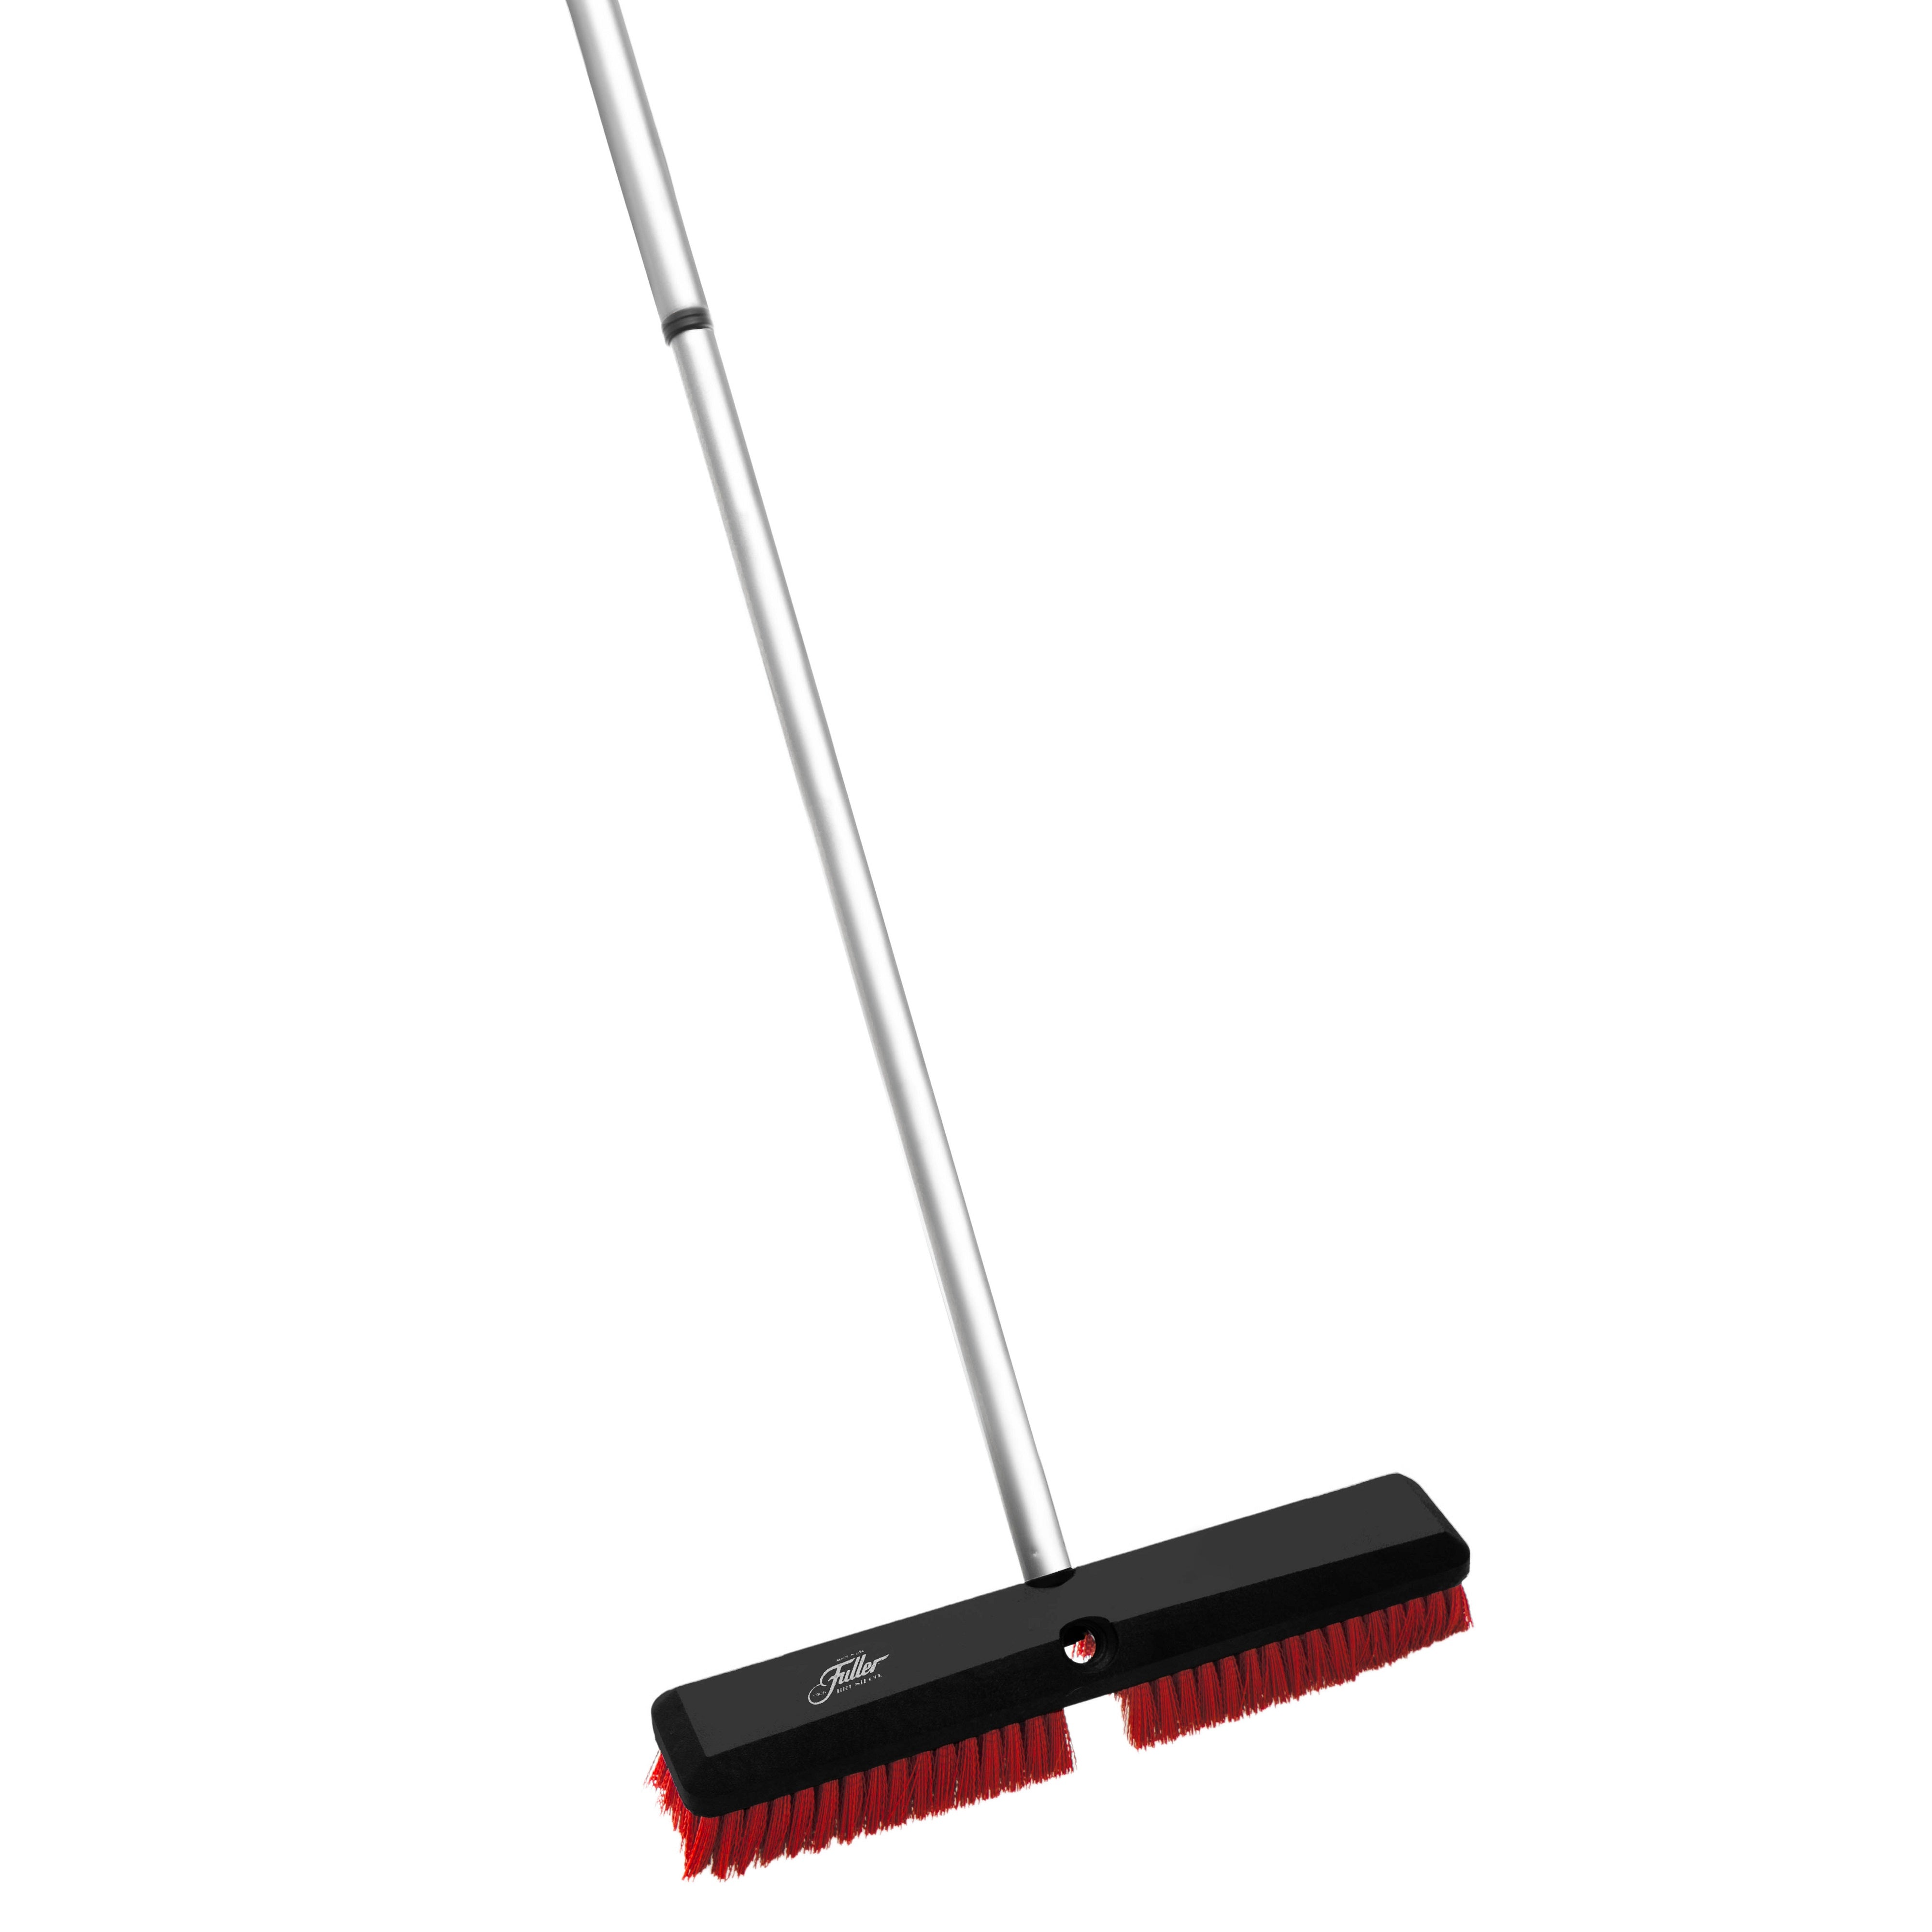 Floor Scrub Brush with Long Handle - 54'' Telescopic Handle, 2 in